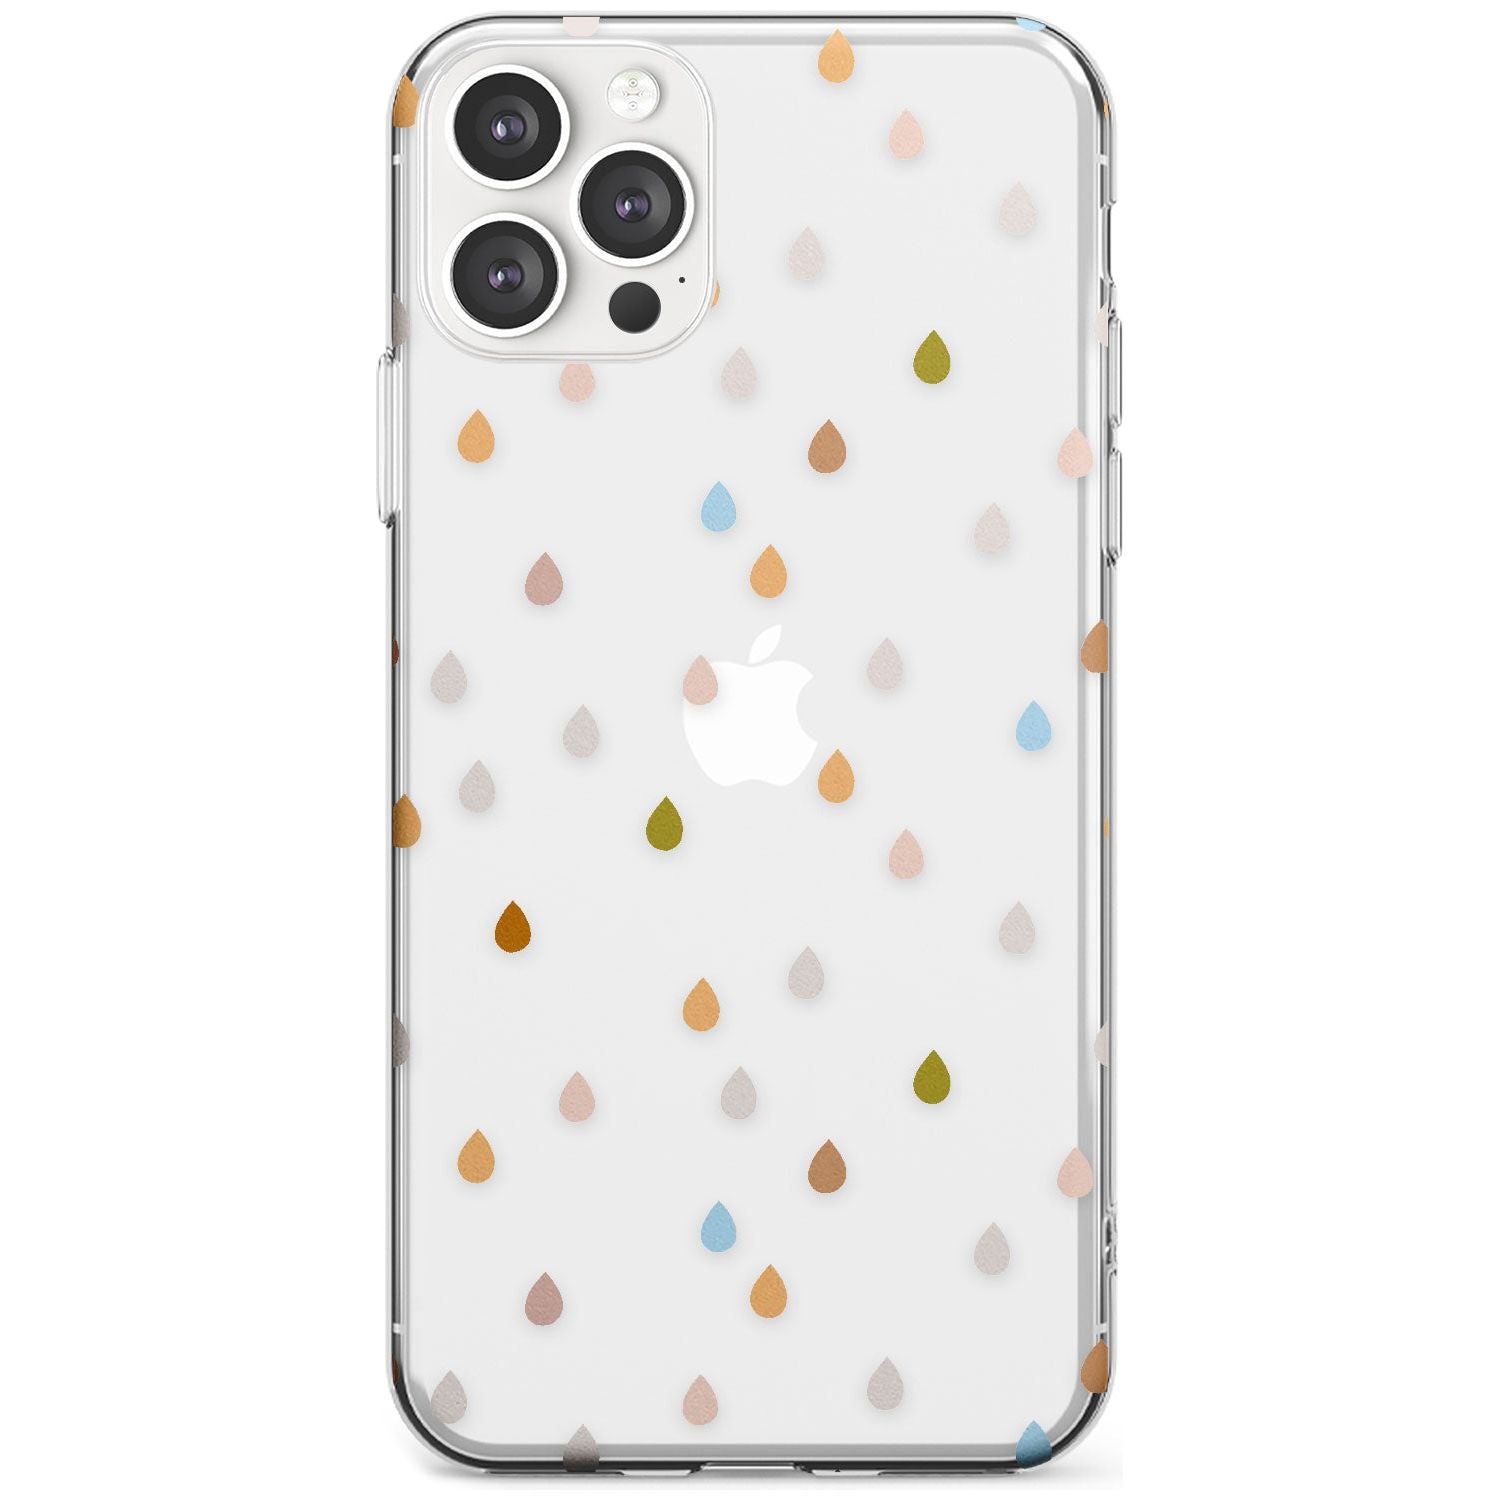 Raindrops Black Impact Phone Case for iPhone 11 Pro Max